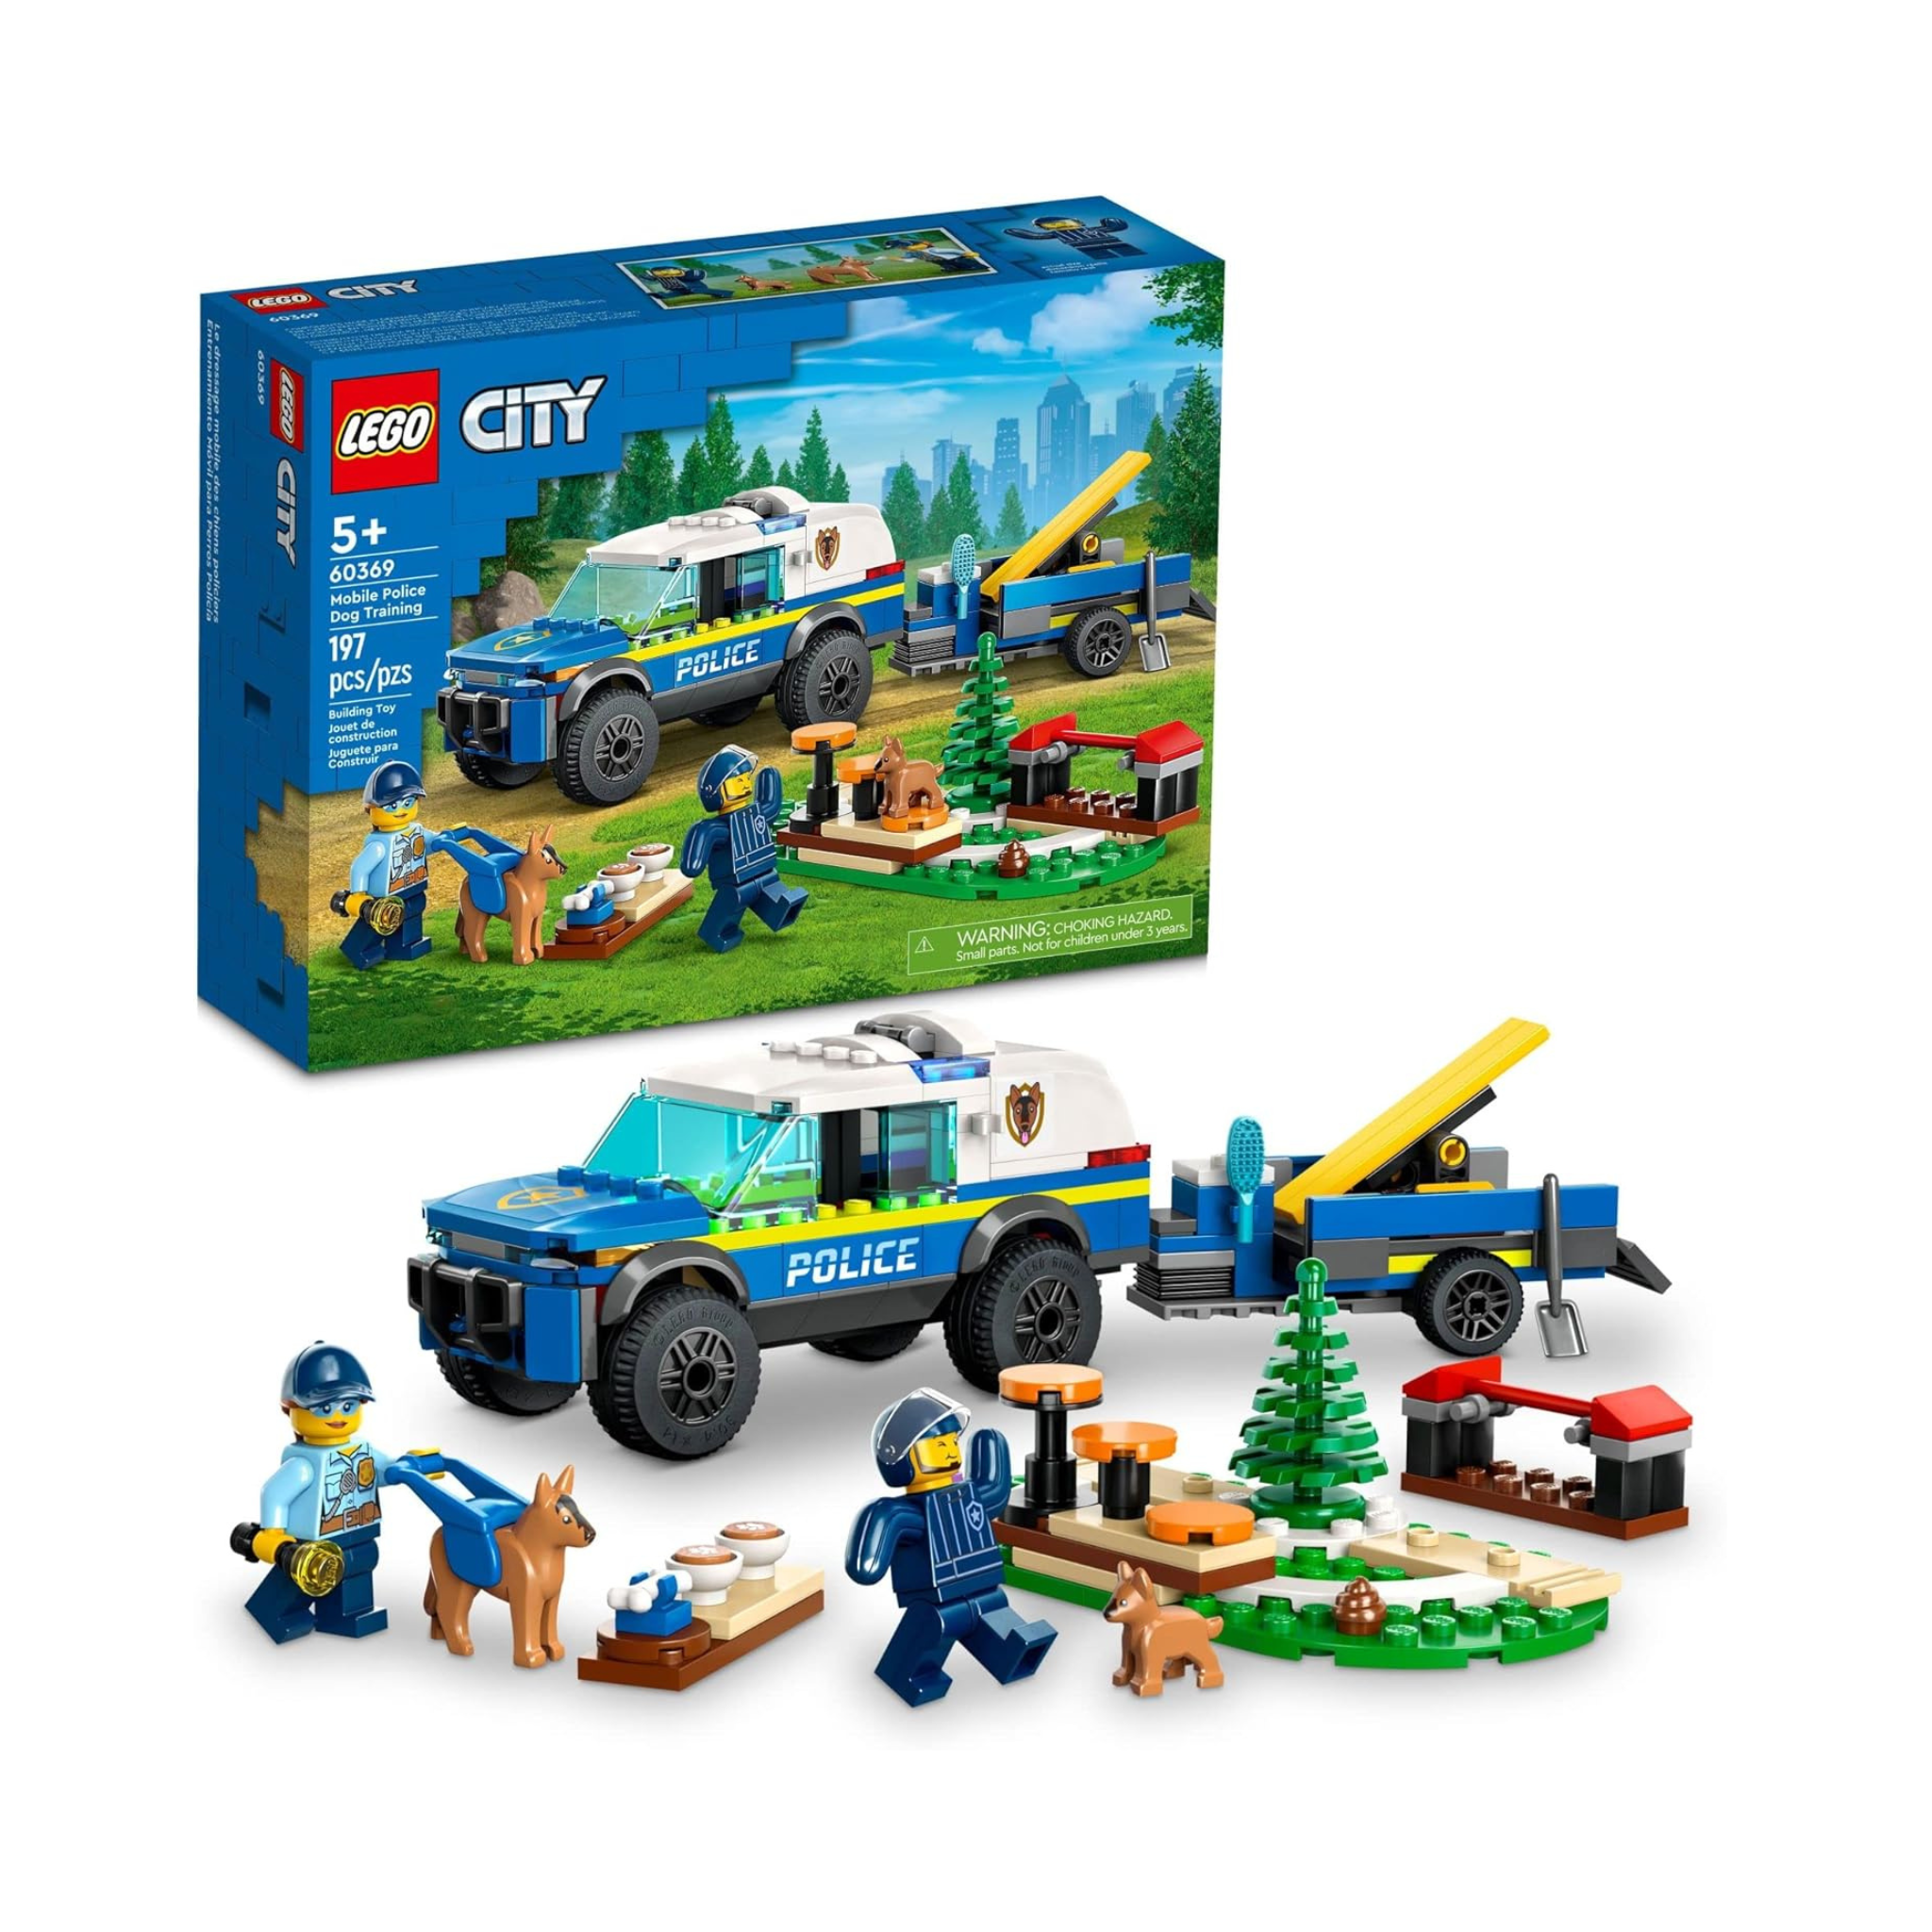 LEGO 60369 City Mobile Police Dog Training SUV Car Toy Playset